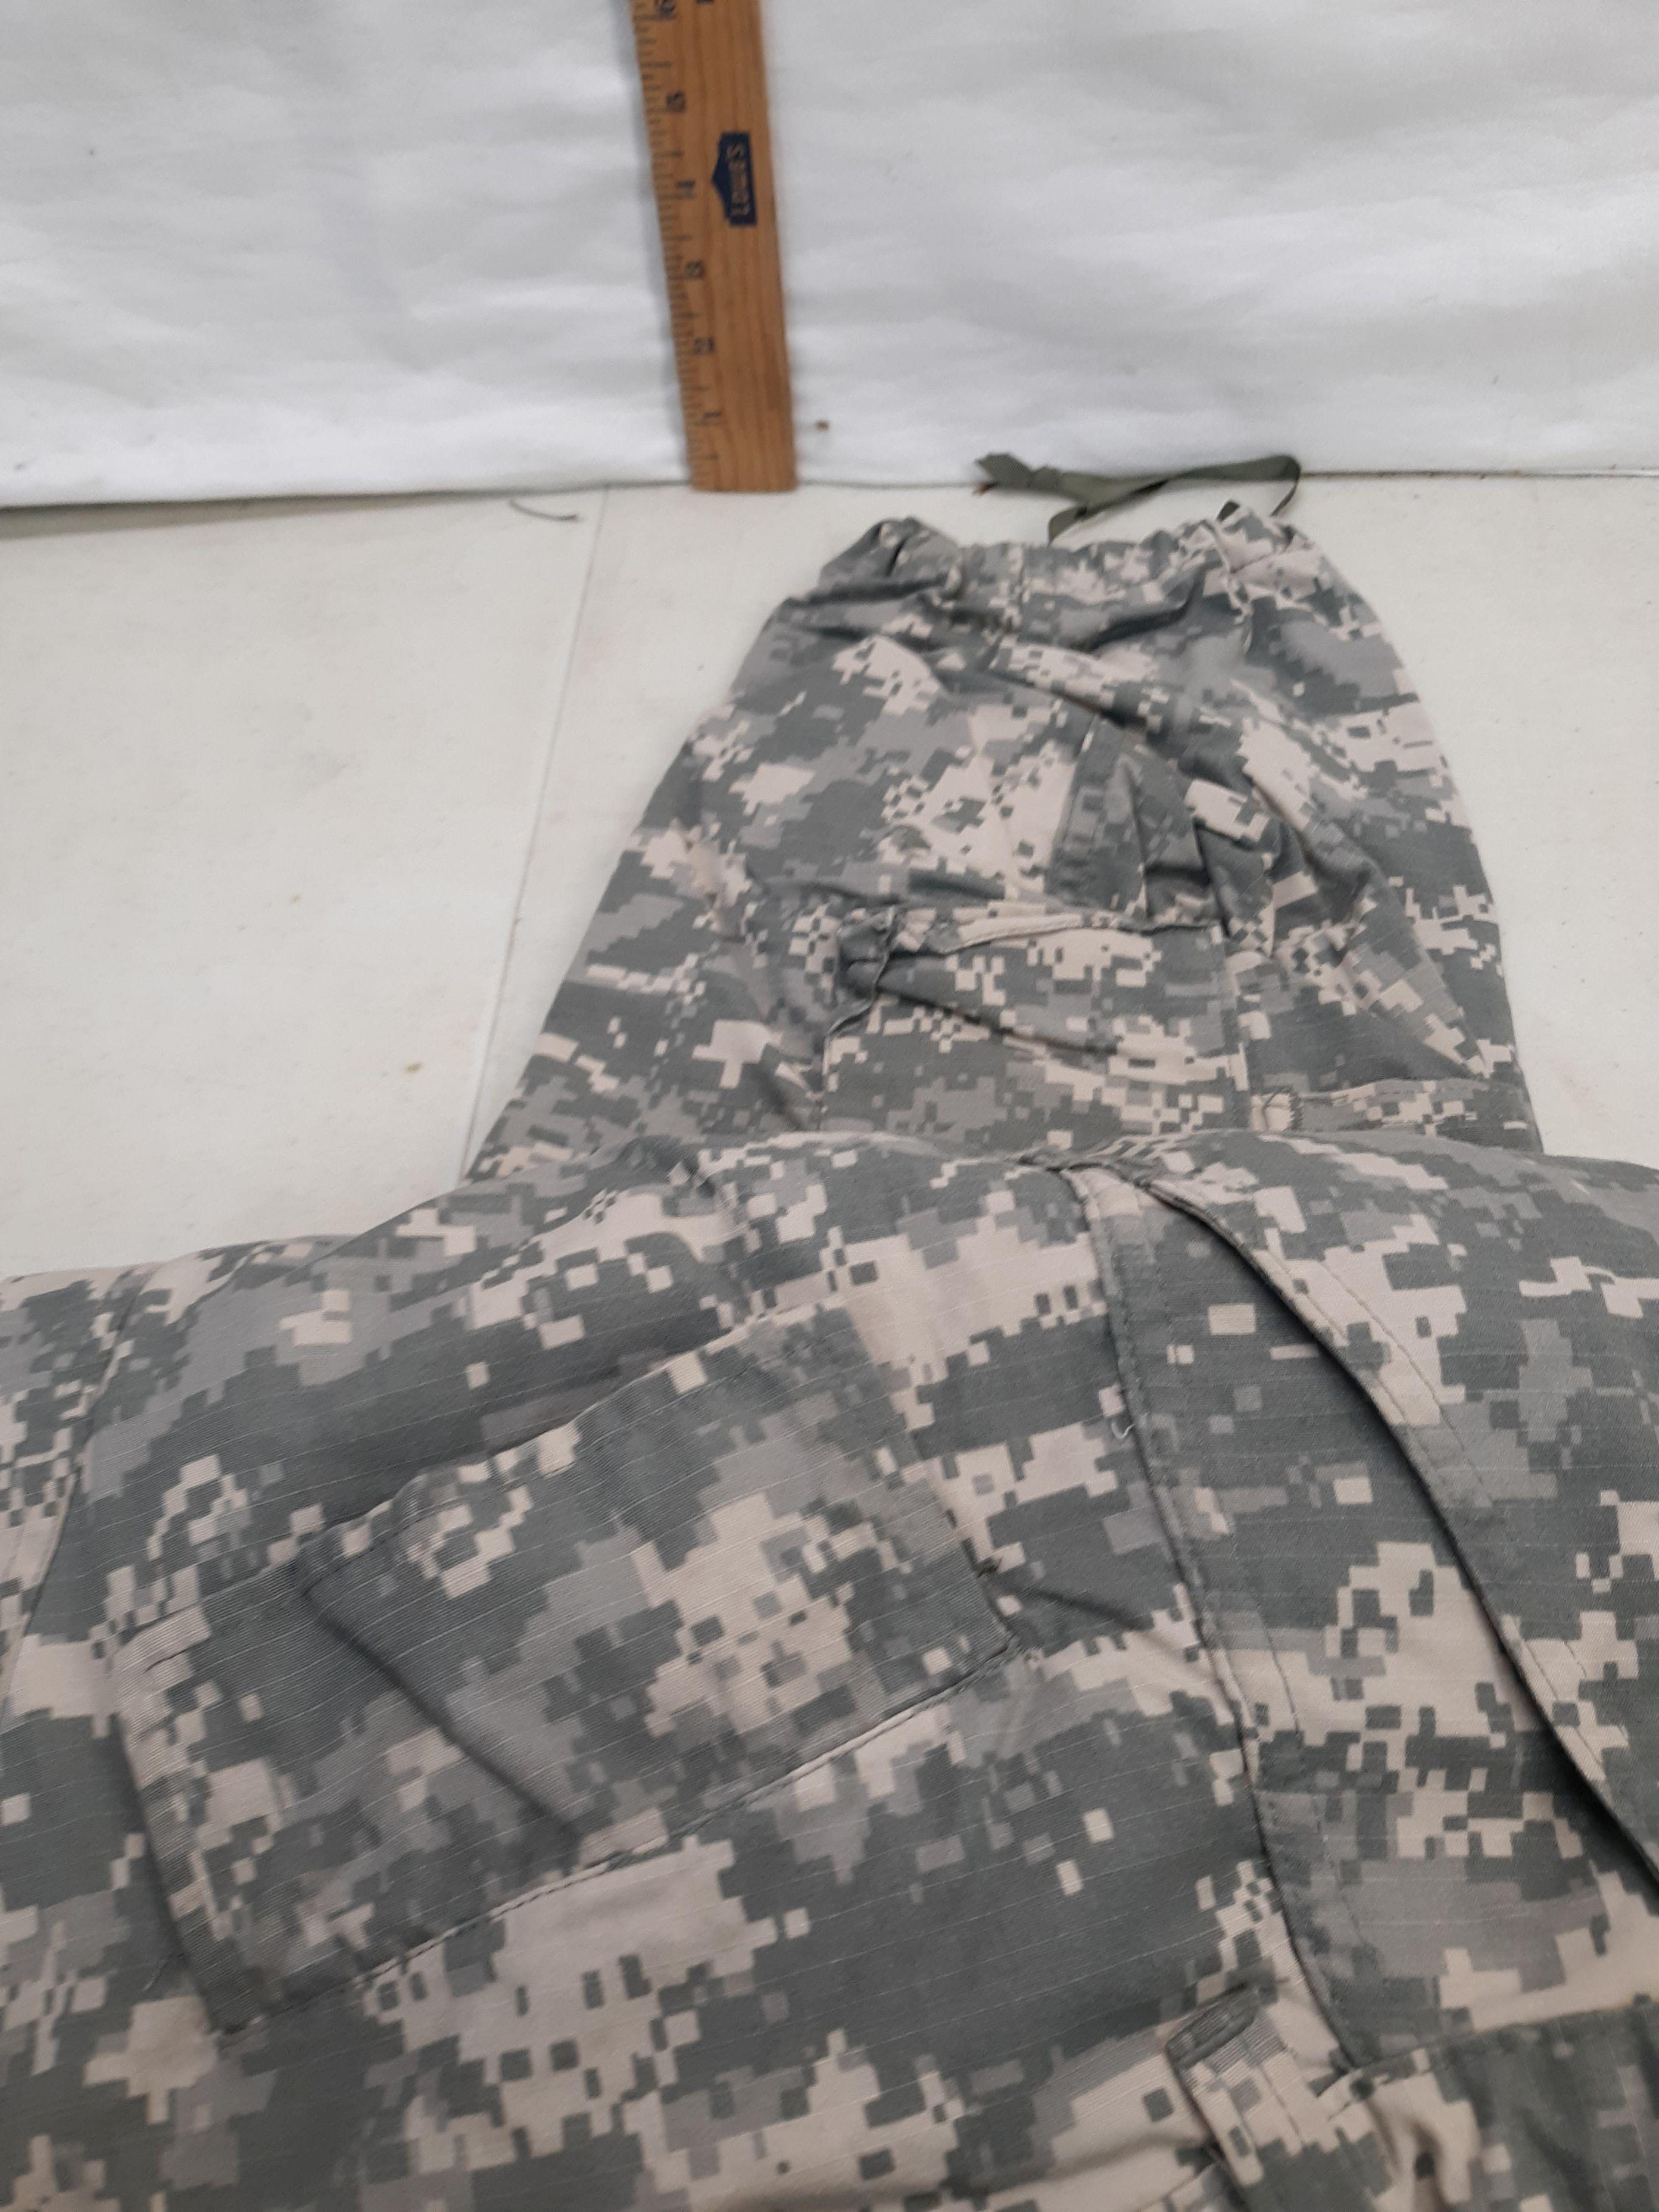 Military camo pants, Size Lg-Reg, waist 35-39, inseam 29.5-32.5